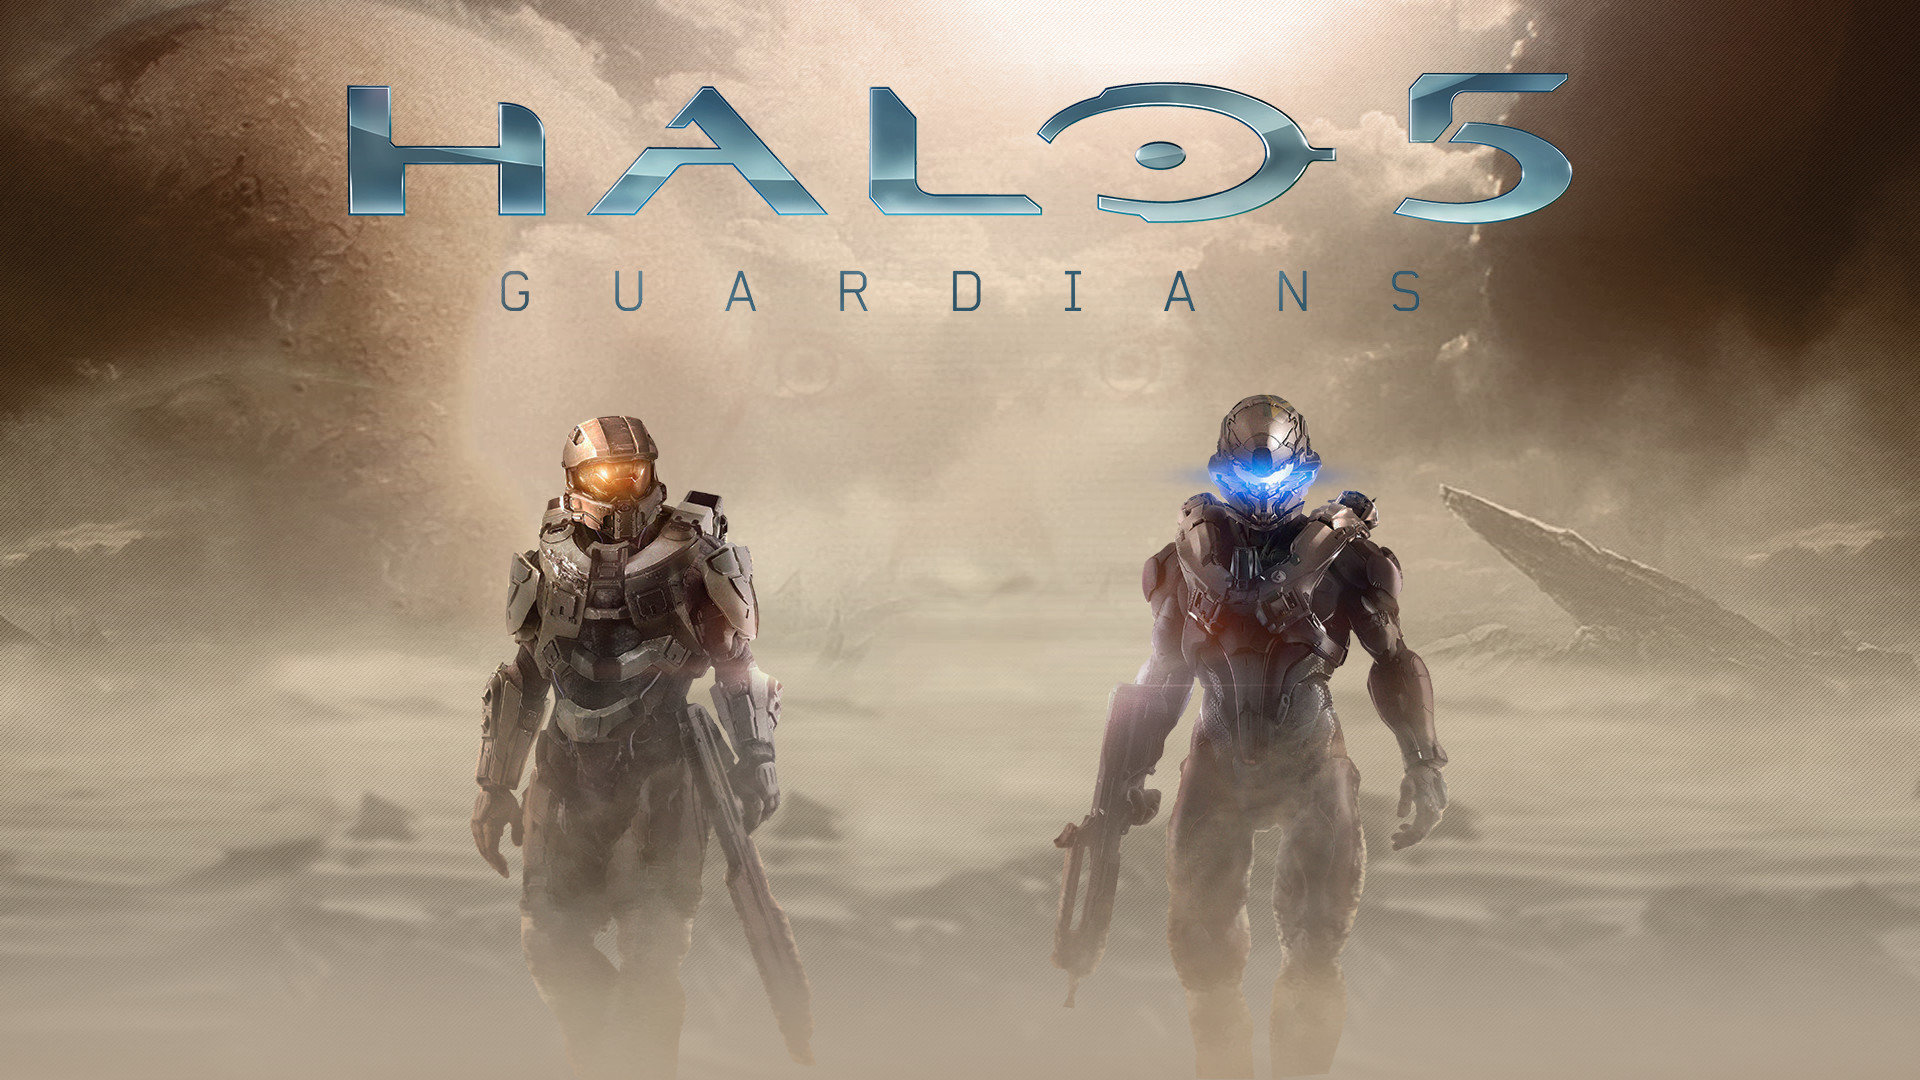 Best Halo 5: Guardians wallpaper ID:116988 for High Resolution hd 1920x1080 desktop